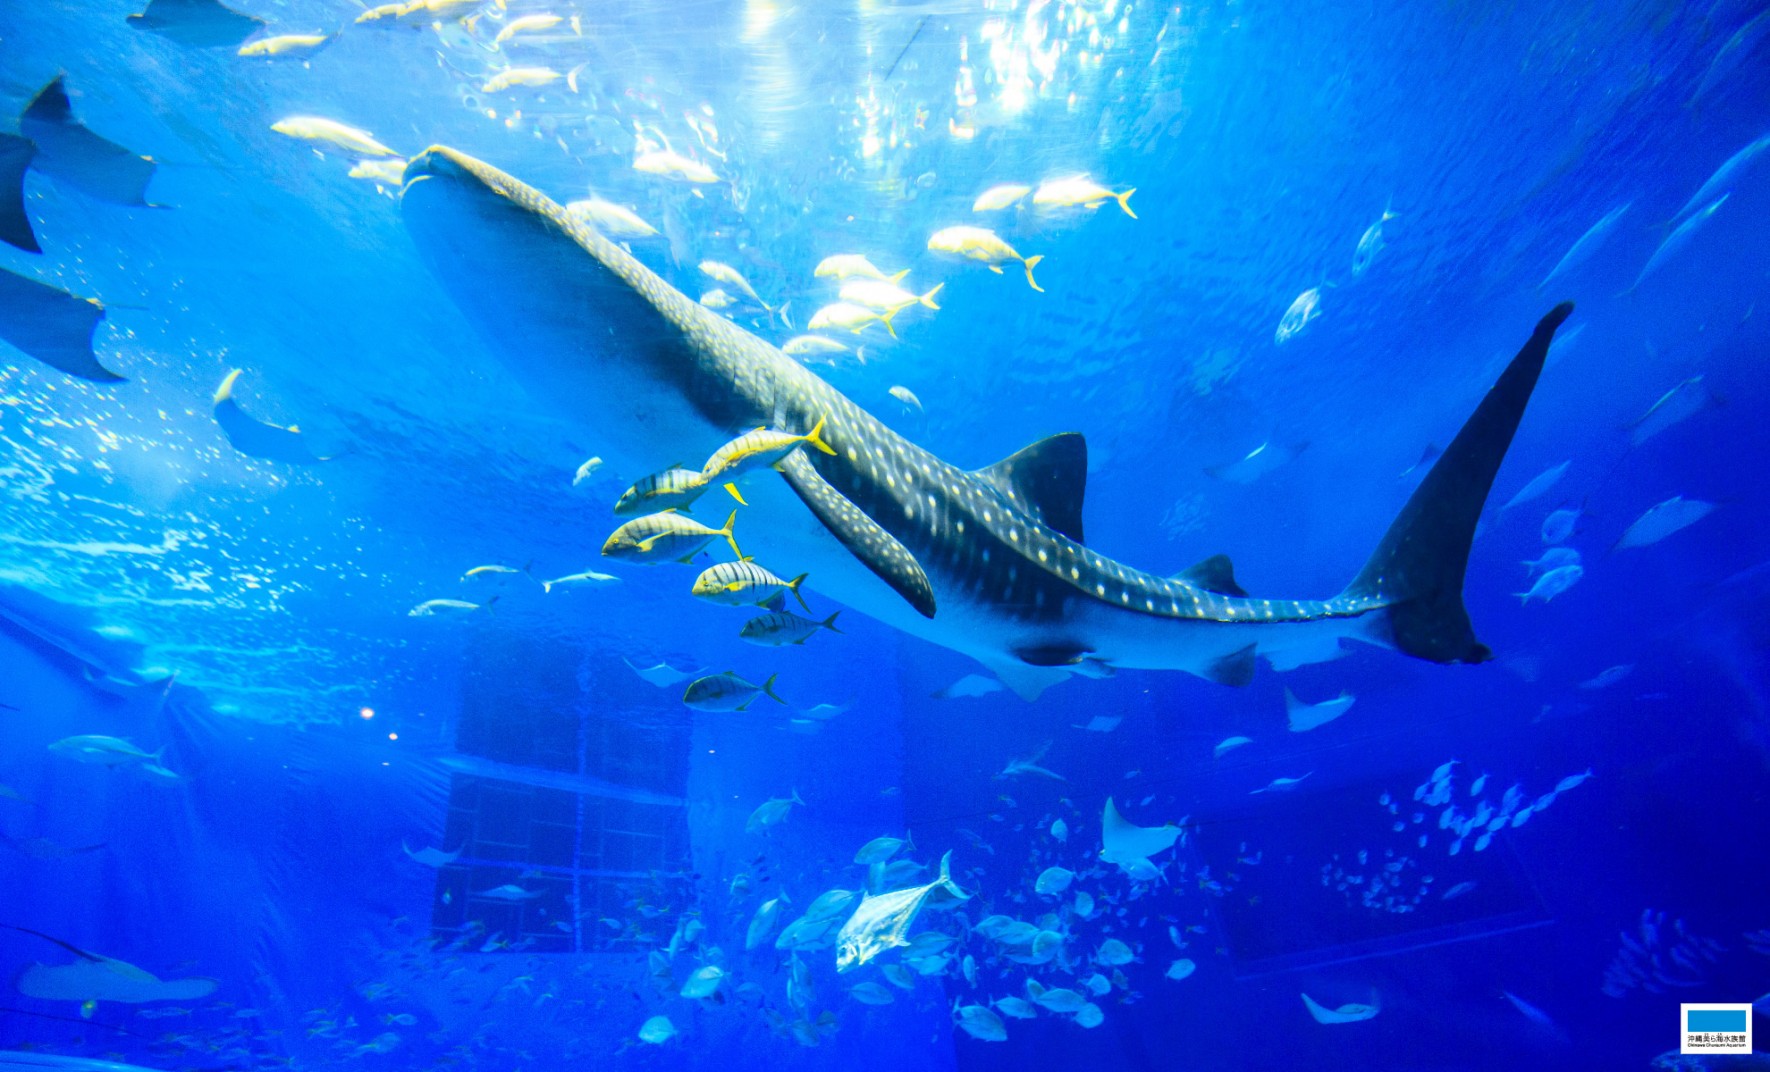 Downloads | Okinawa Churaumi Aquarium - For the next generation to inherit;  the beautiful seas of Okinawa. -